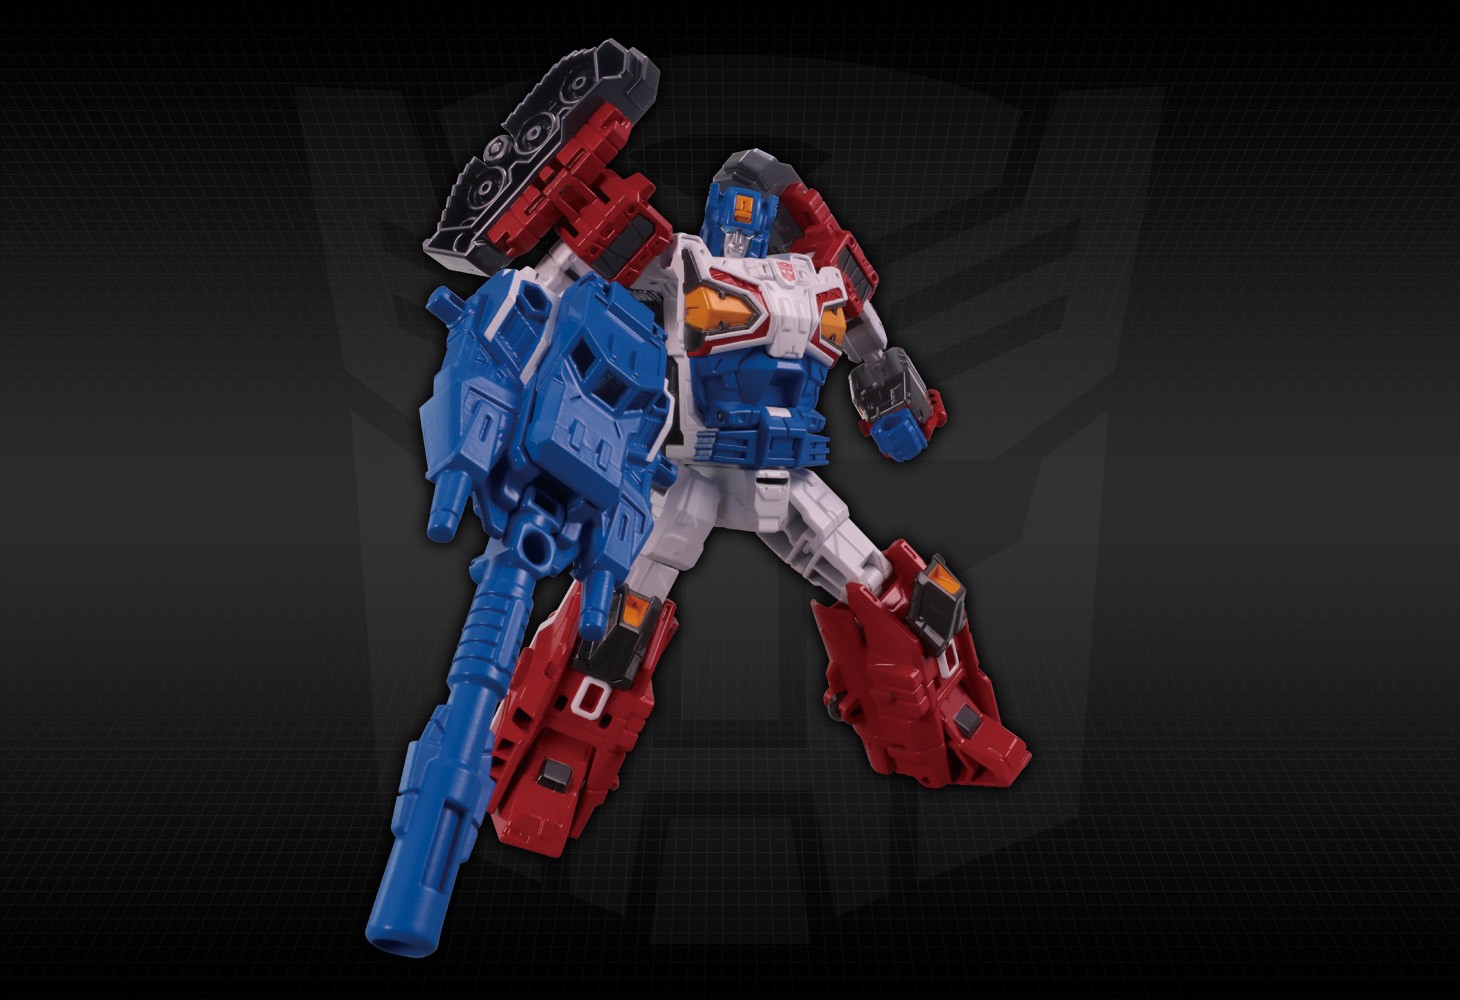 Transformers News: Takara Tomy Transformers Legends LG-EX Big Powered Robot and Alternate Modes, Color Images, Pre-orde